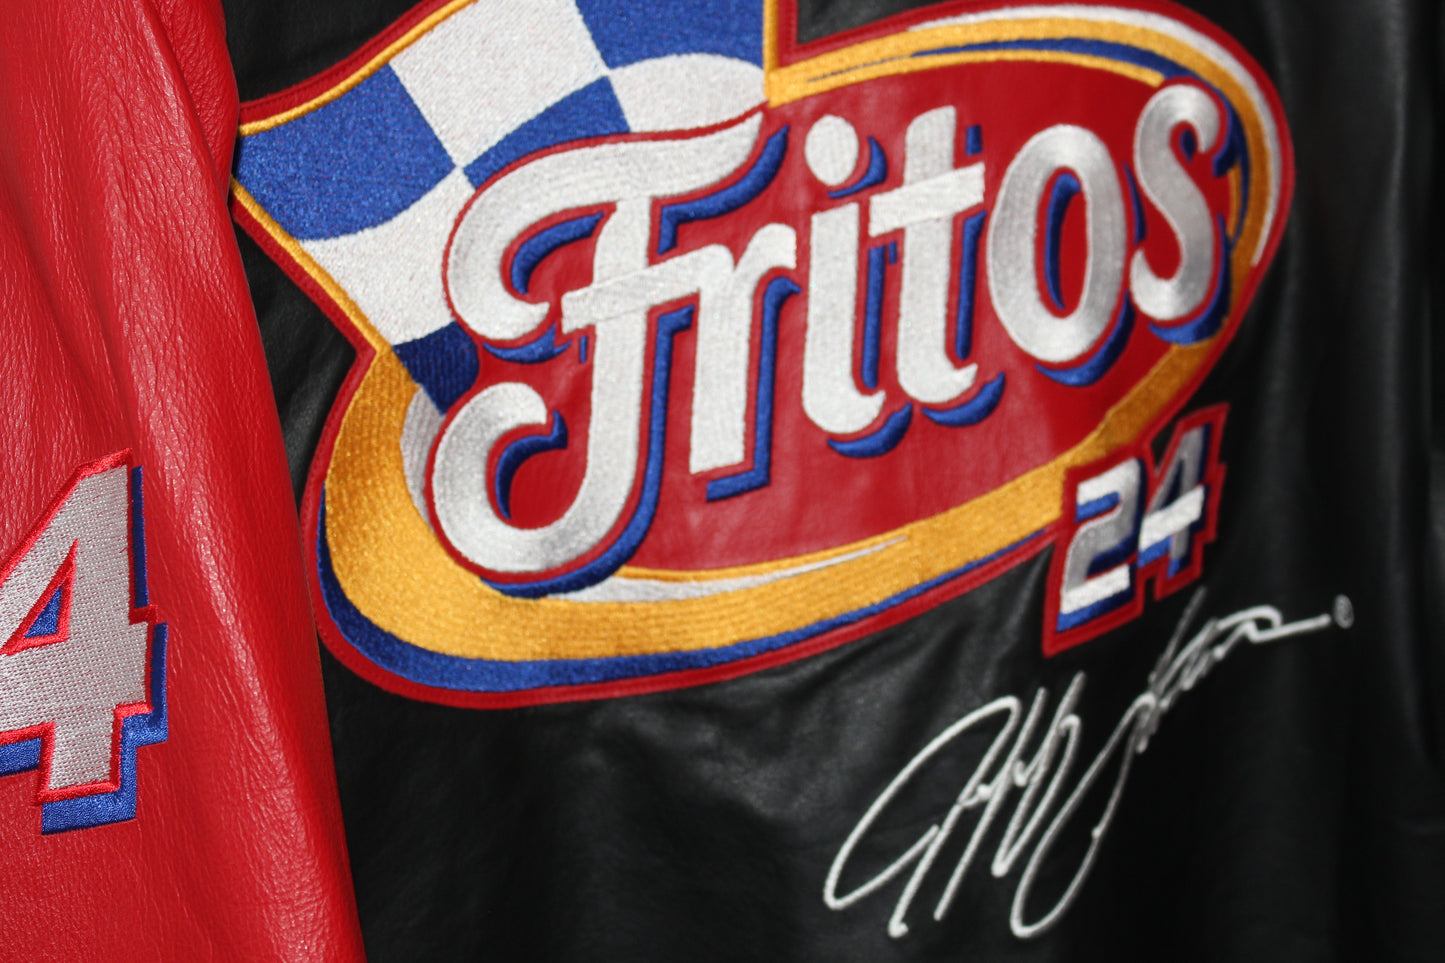 Fritos Racing NASCAR Jeff Gordon #24 Chase Authentics (L)